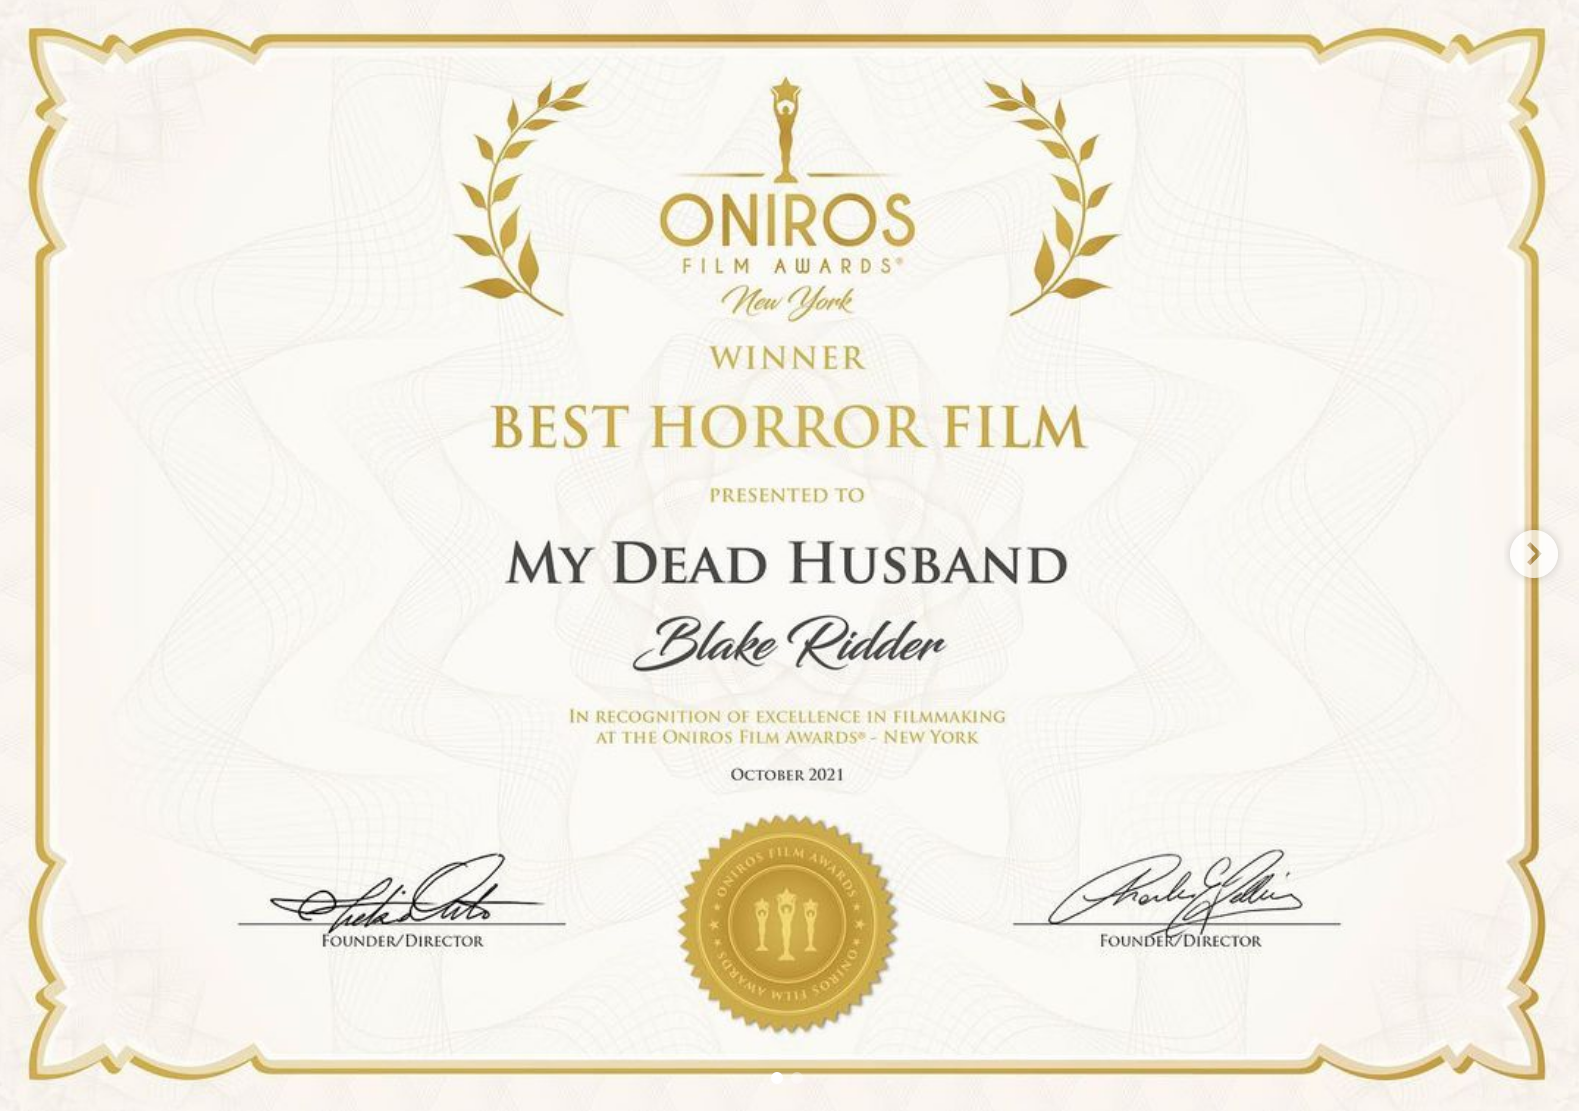 MY DEAD HUSBAND wins BEST HORROR FILM award